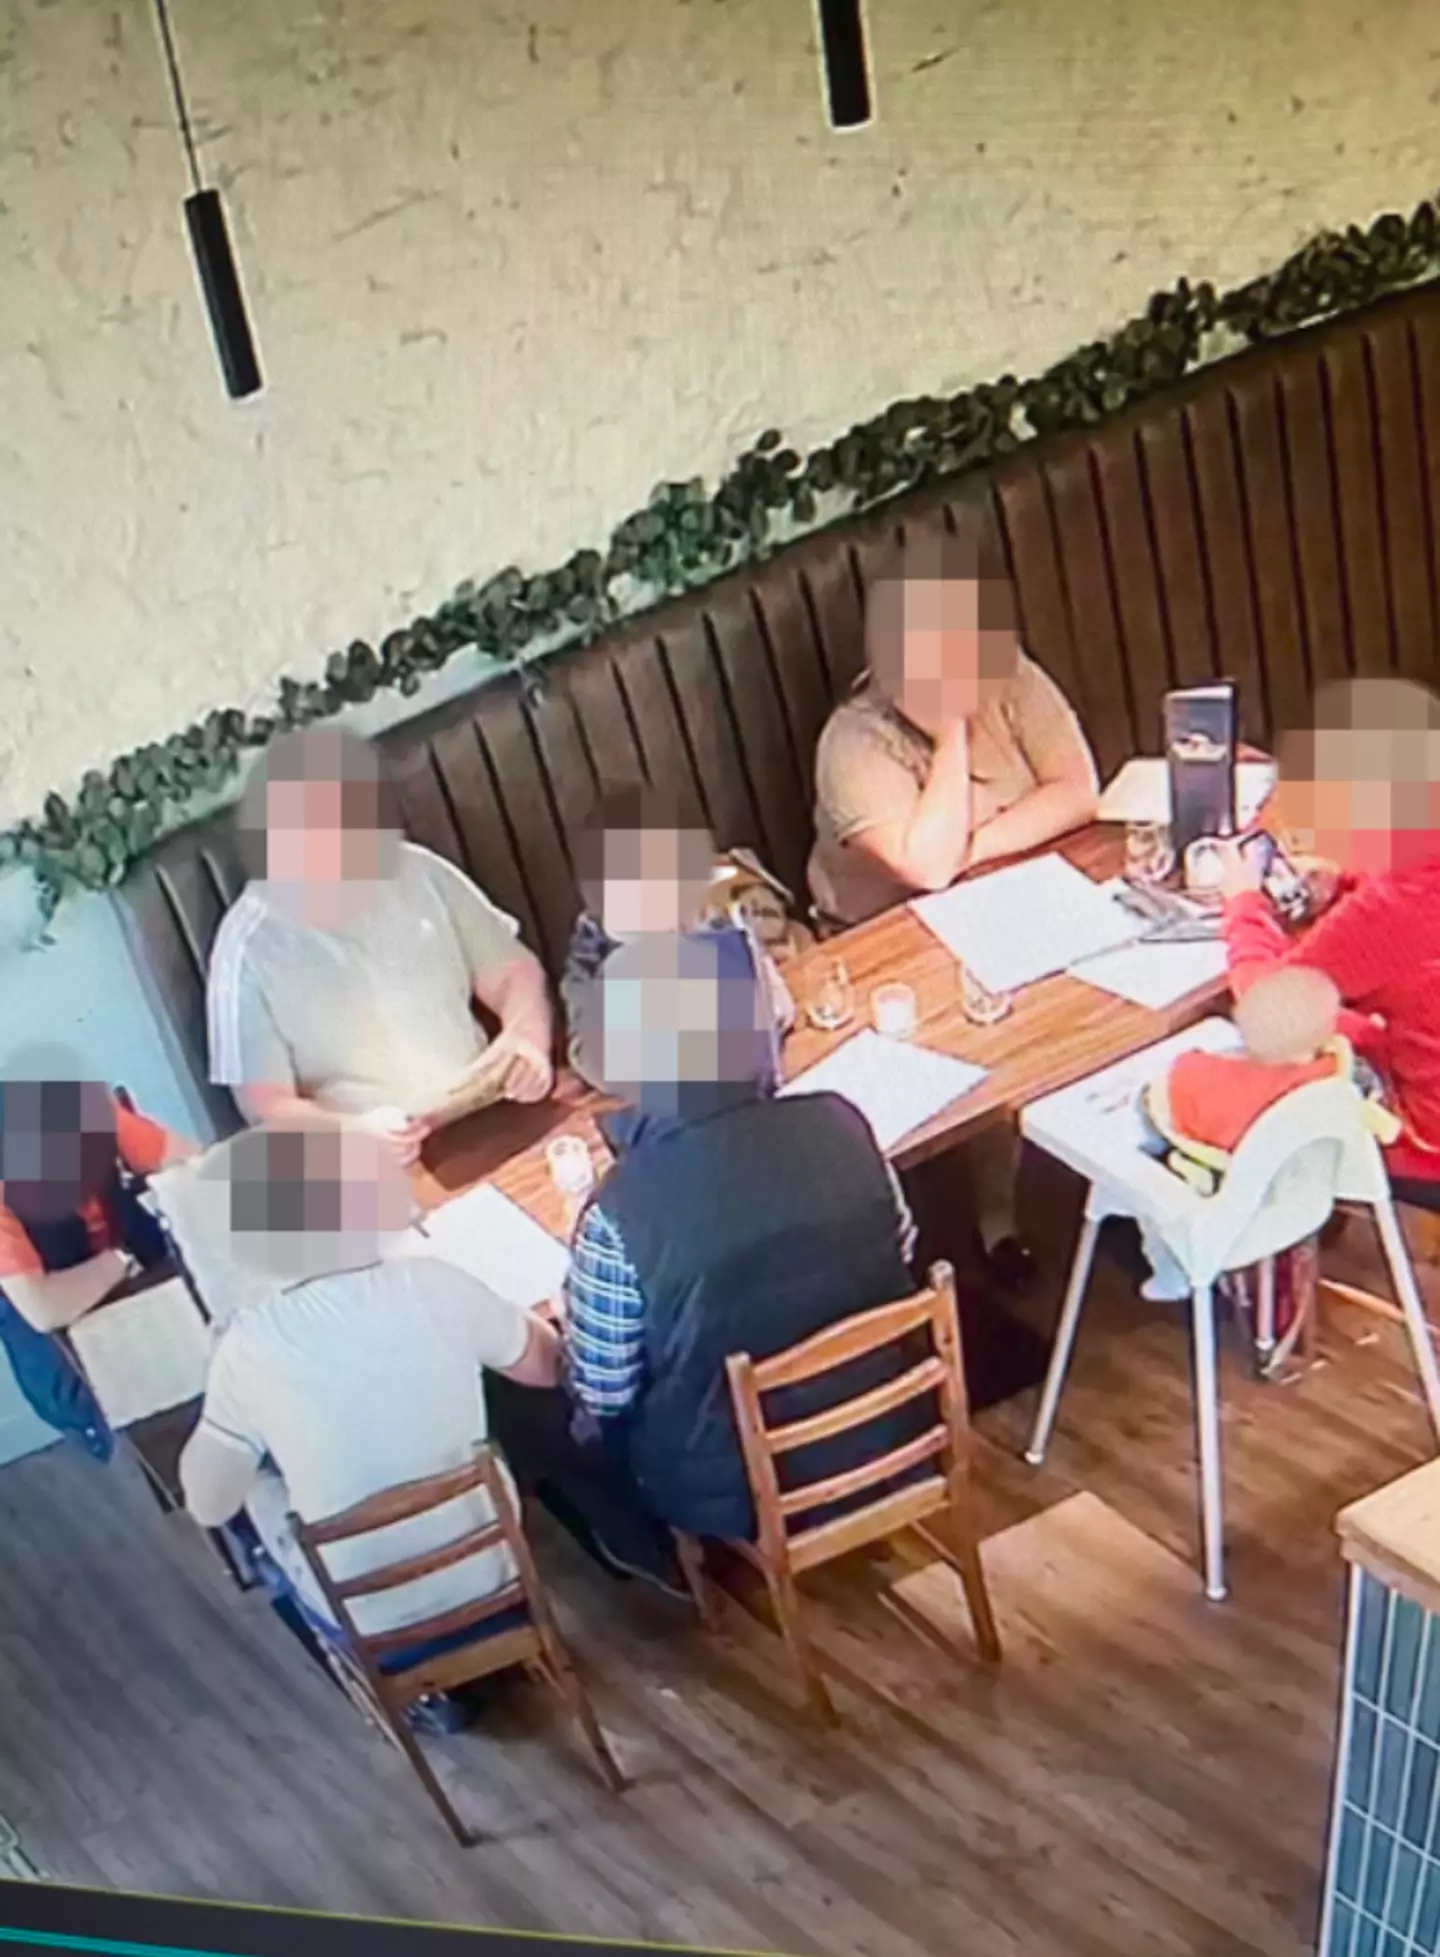 The restaurant caught them on CCTV. (Facebook/Bella Ciao Swansea)